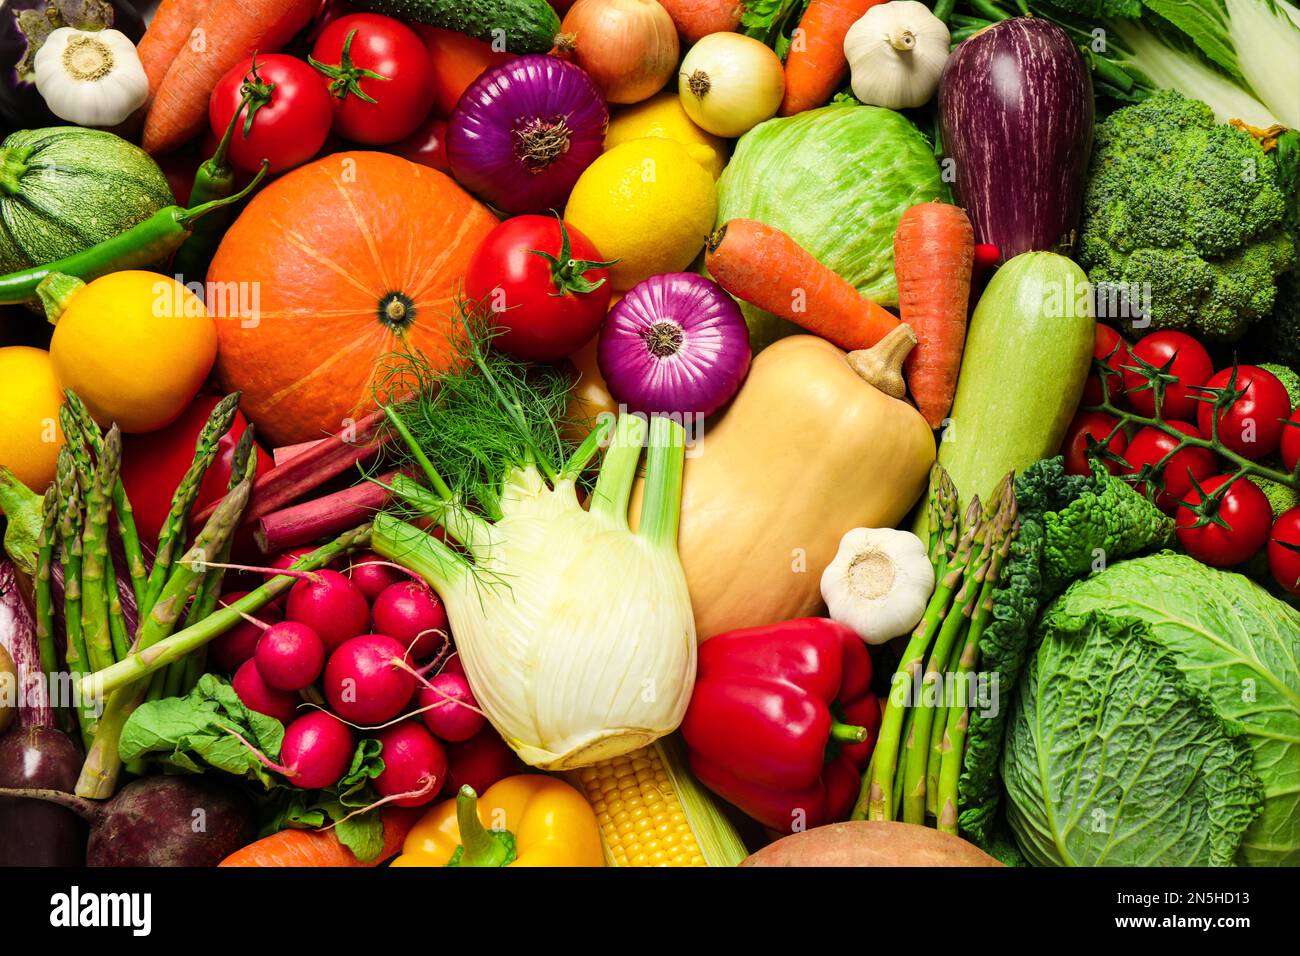 https://c8.alamy.com/compes/2n5hd13/muchas-verduras-frescas-como-fondo-vista-superior-2n5hd13.jpg